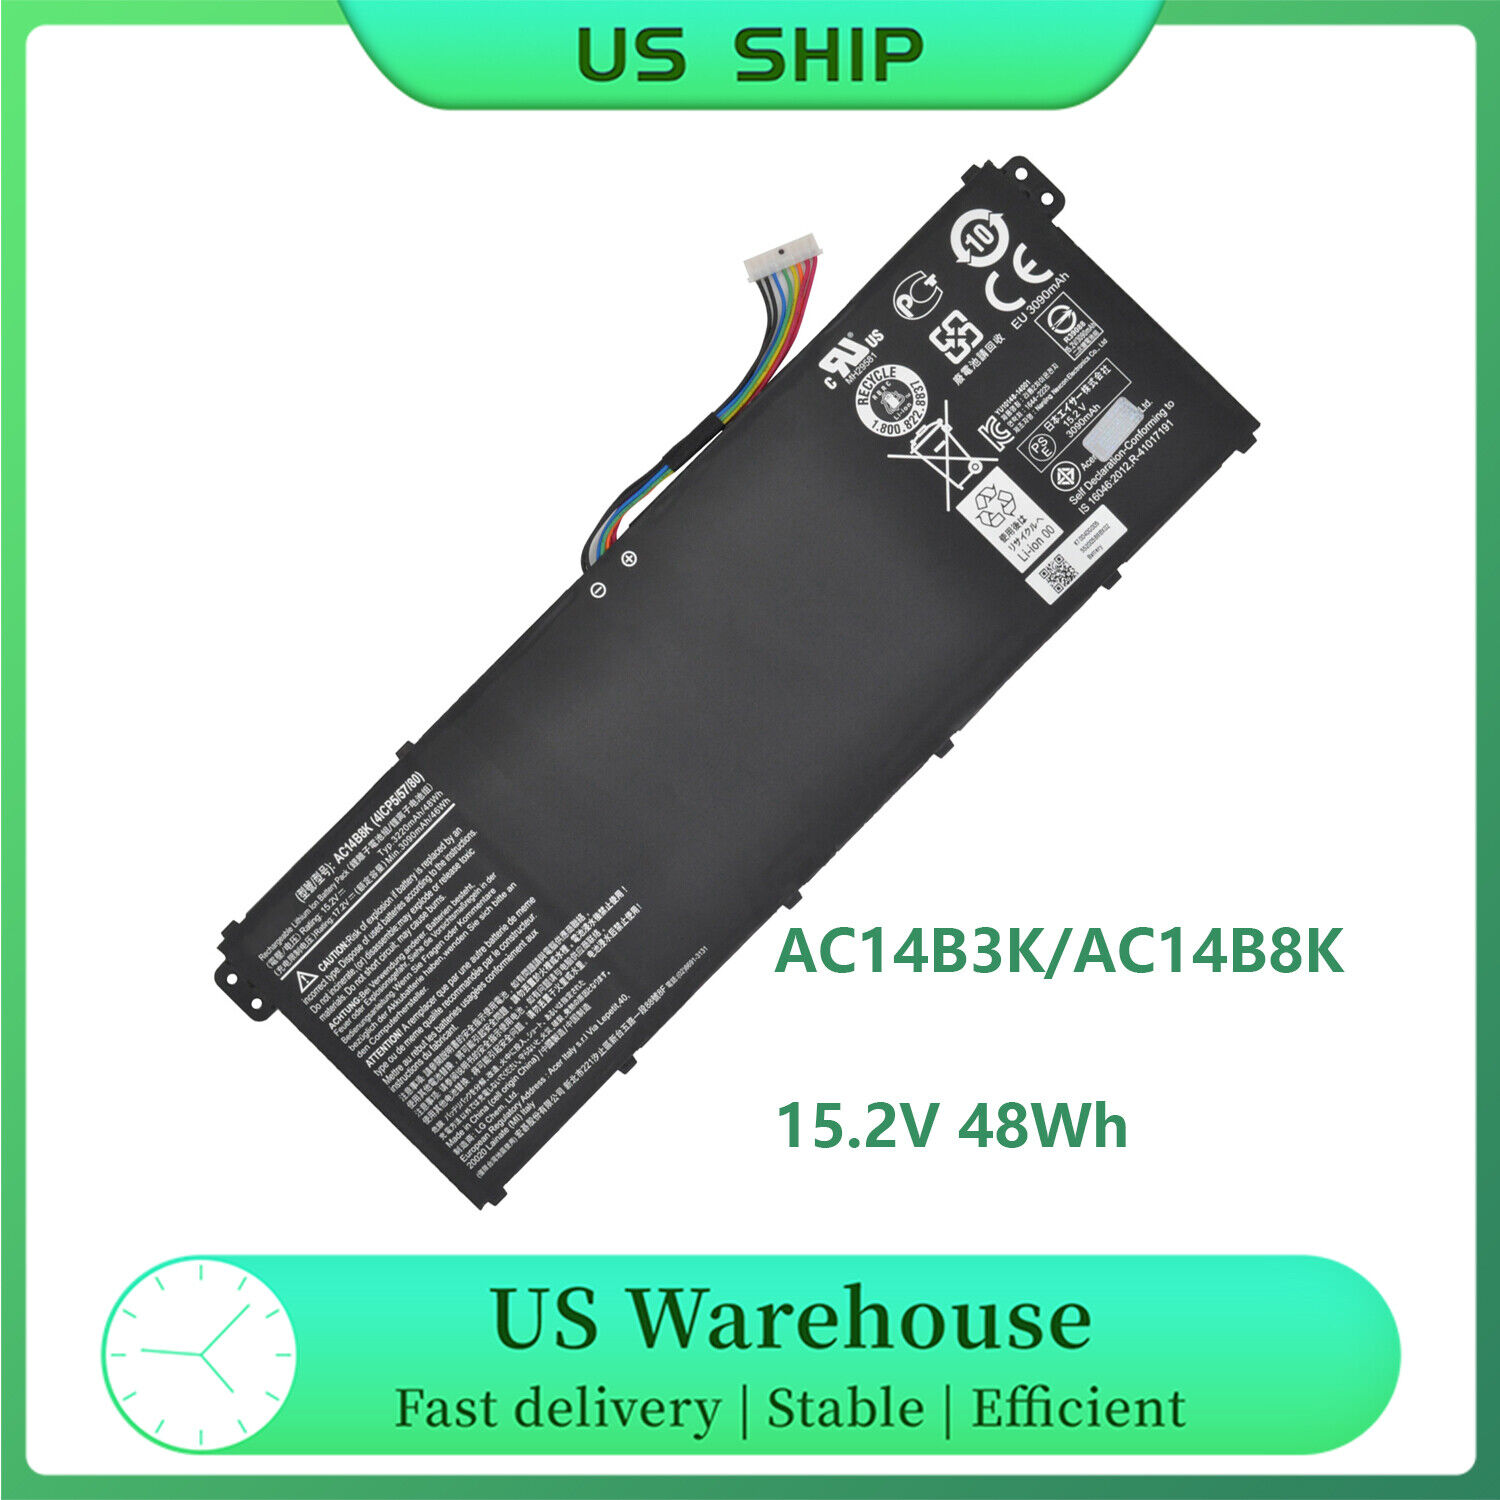 Genuine AC14B8K battery for Acer Chromebook CB3-111 CB5-571 AspireV3-371 AC14B3K